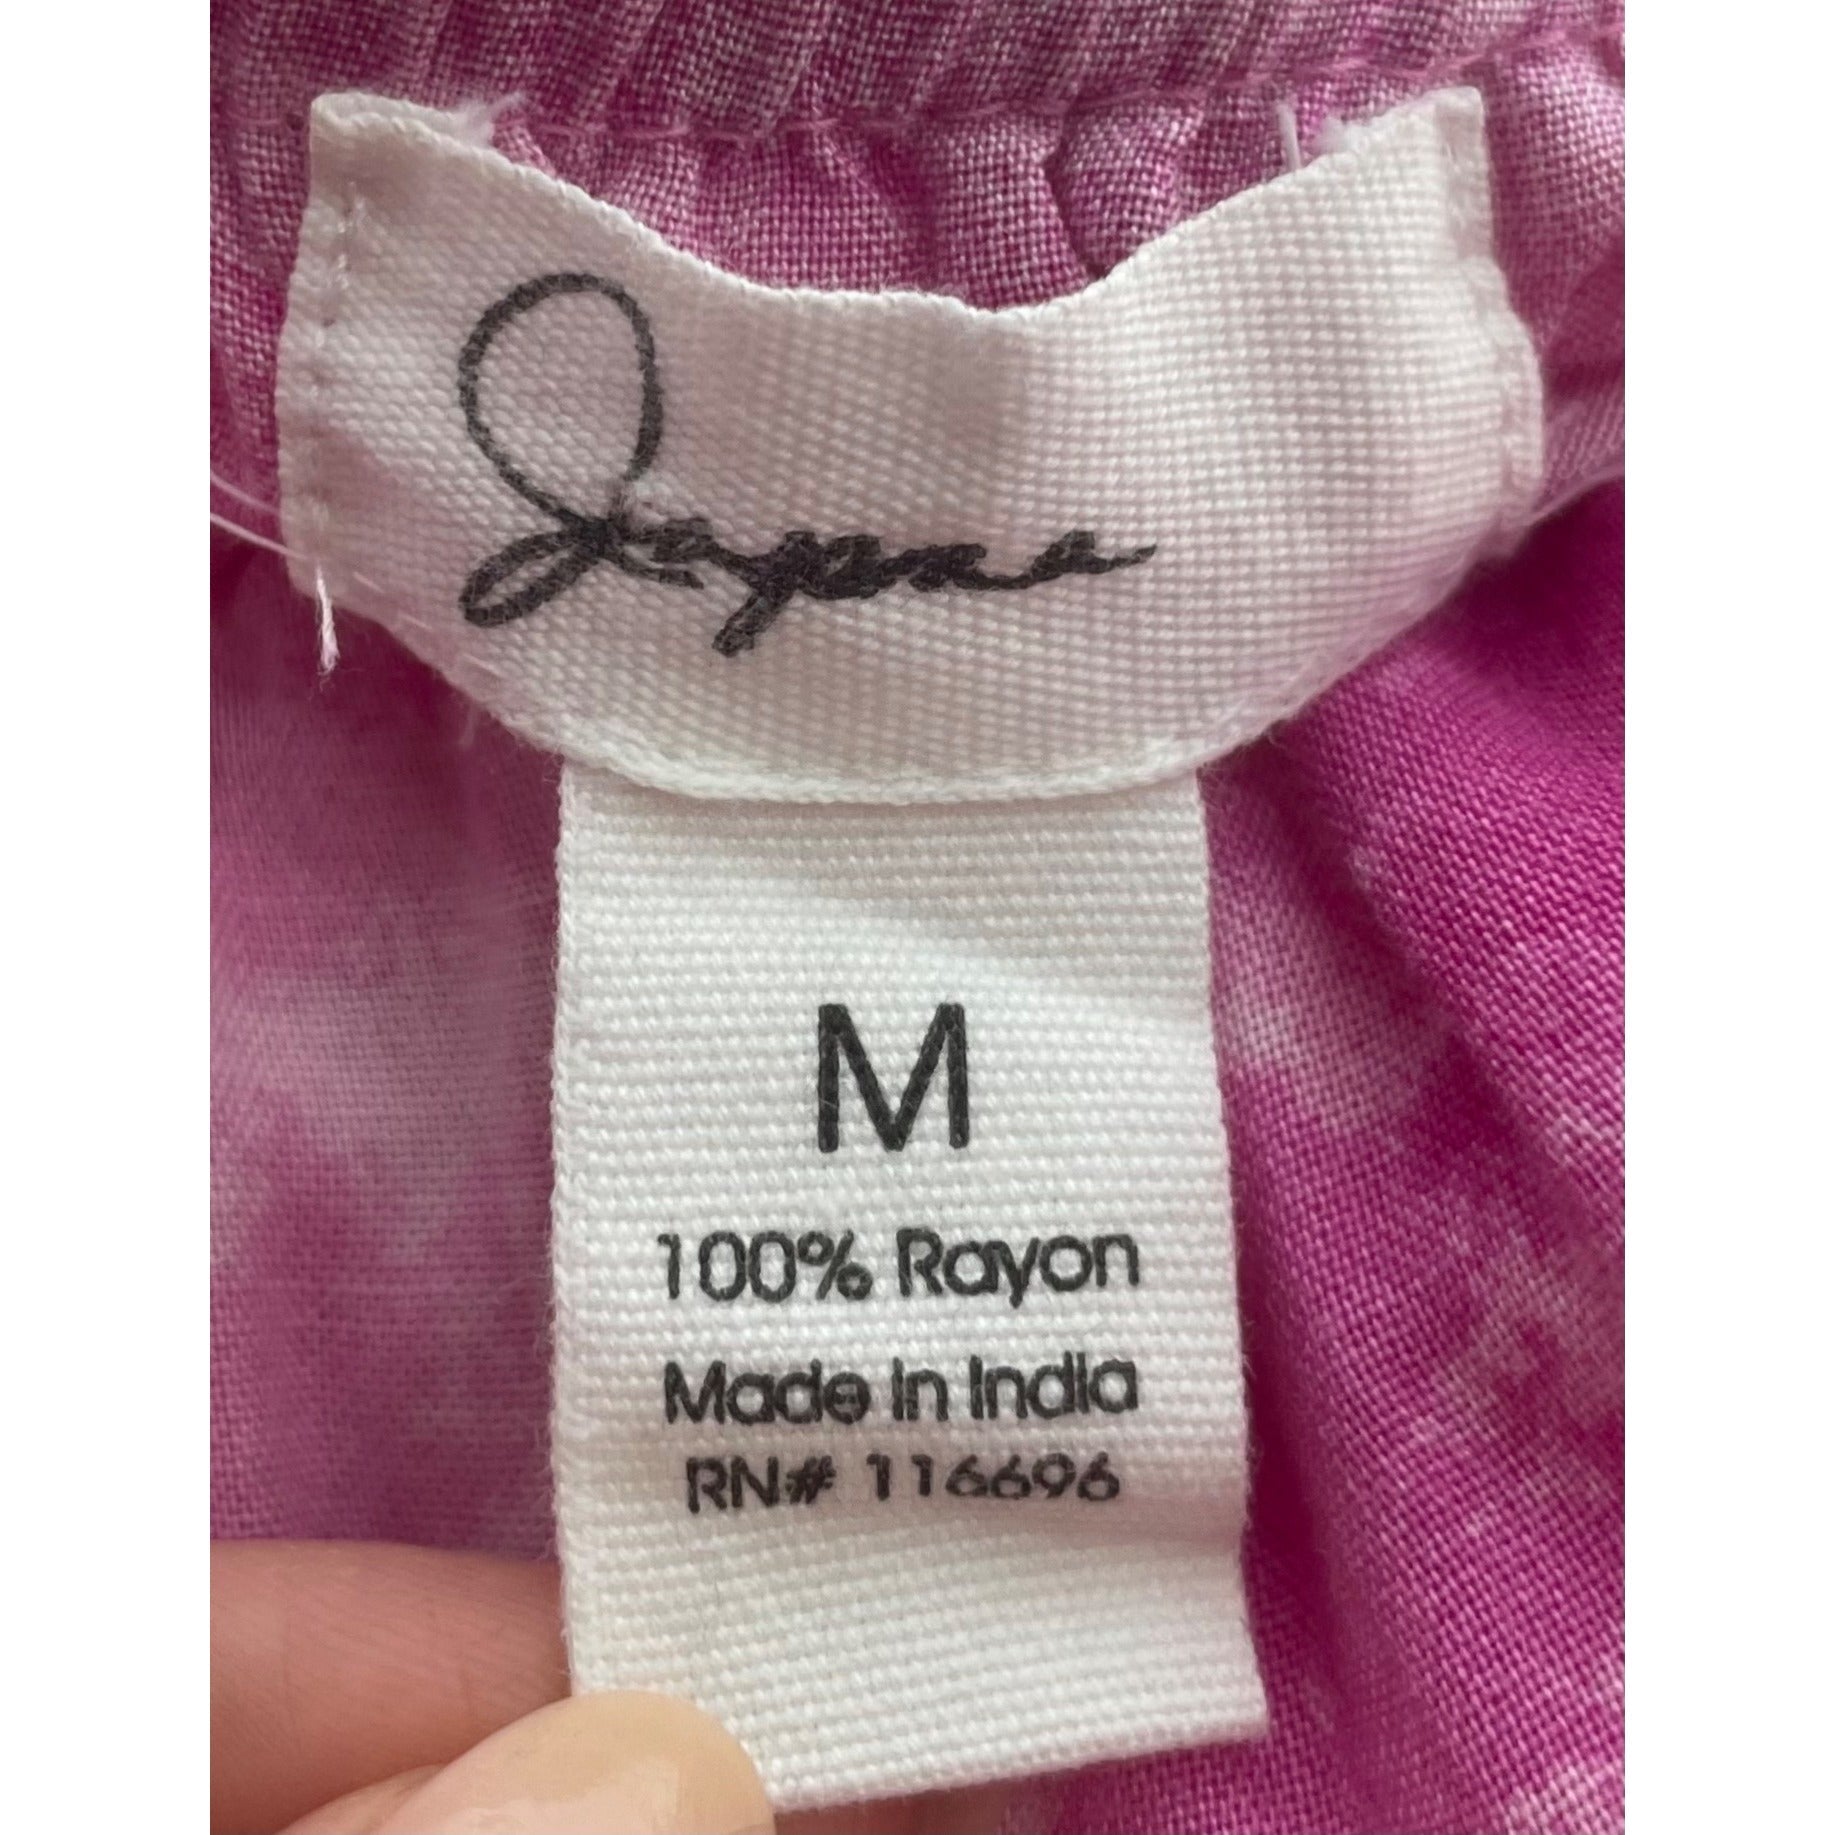 Japna Women's Size Medium Strapless Fuchsia/Pink Tie Die Maxi Dress W/ Drawstring Waist